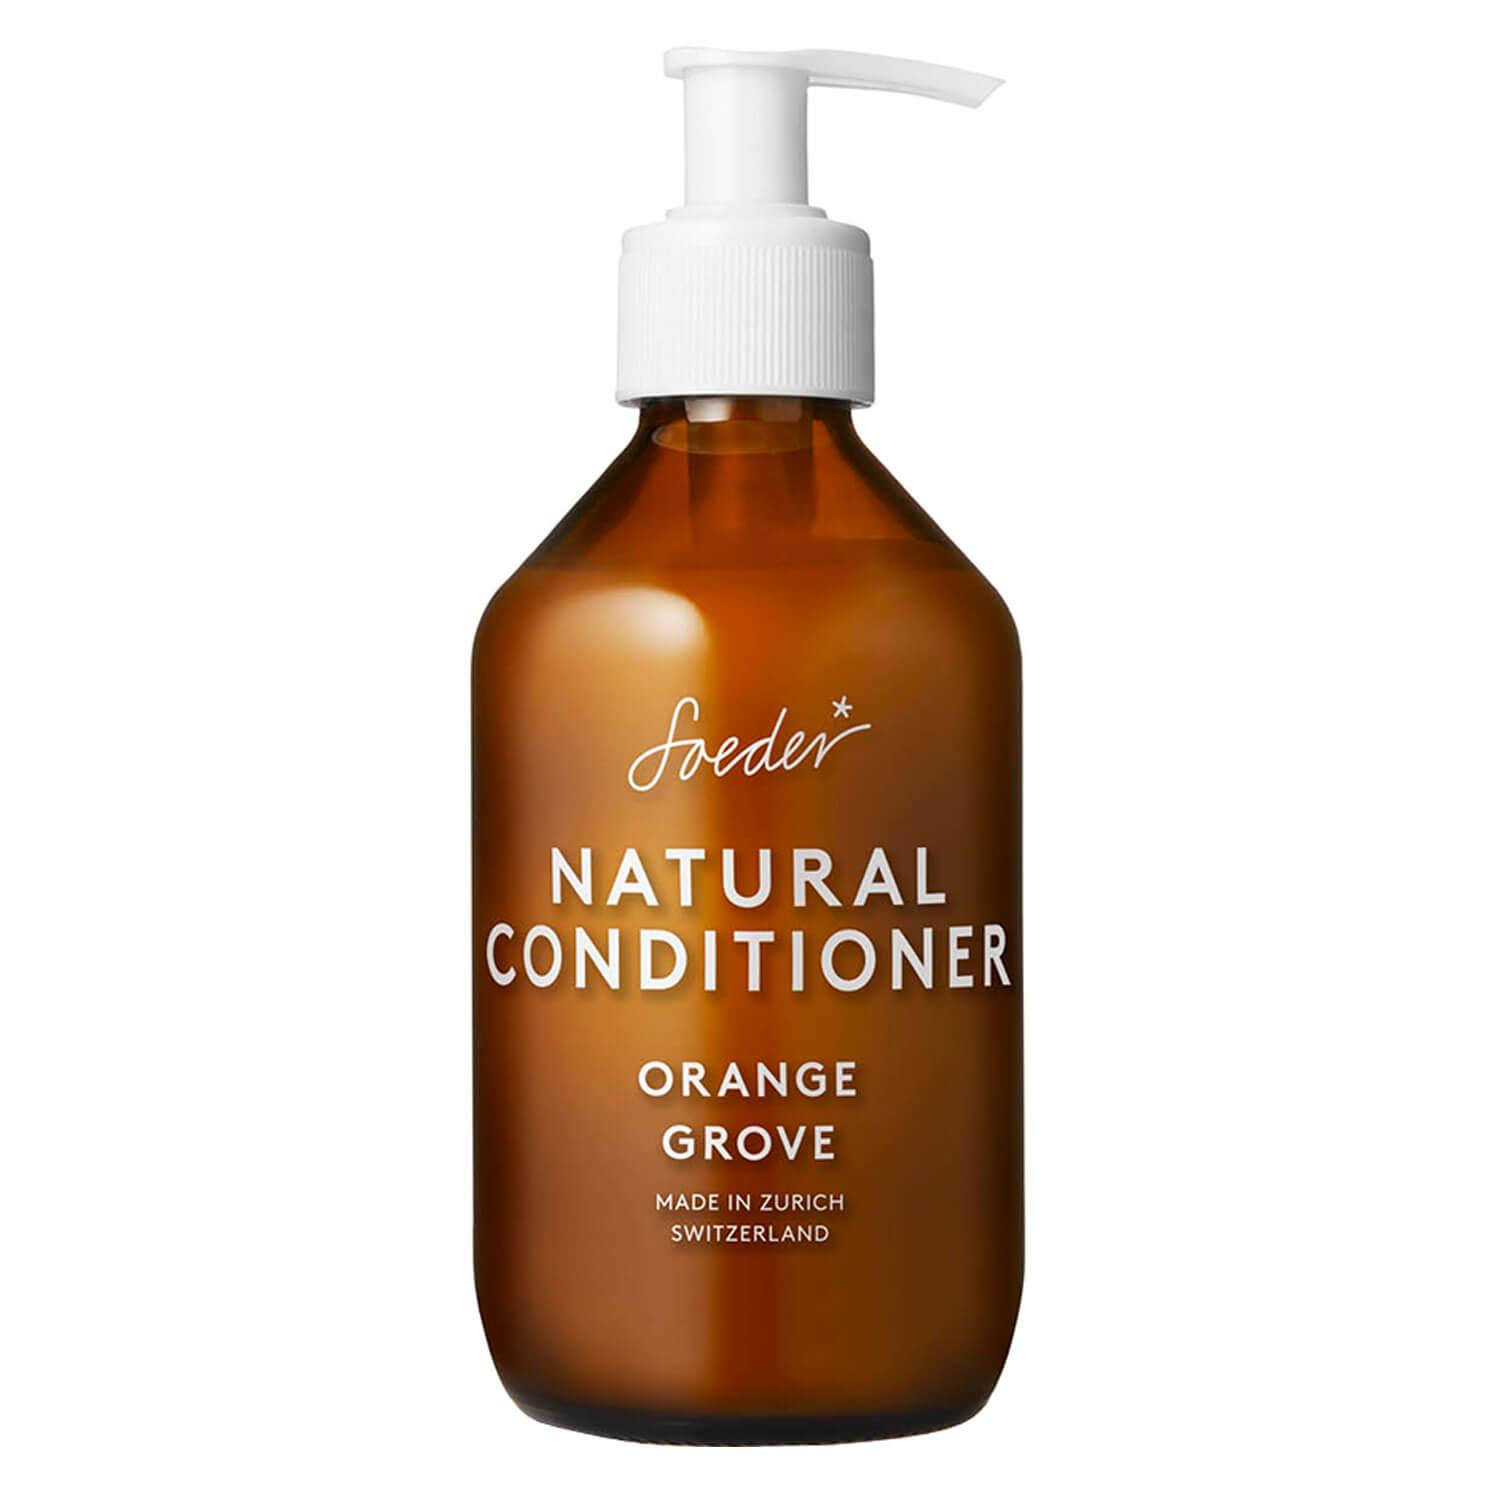 Soeder - Natural Conditioner Orange Grove